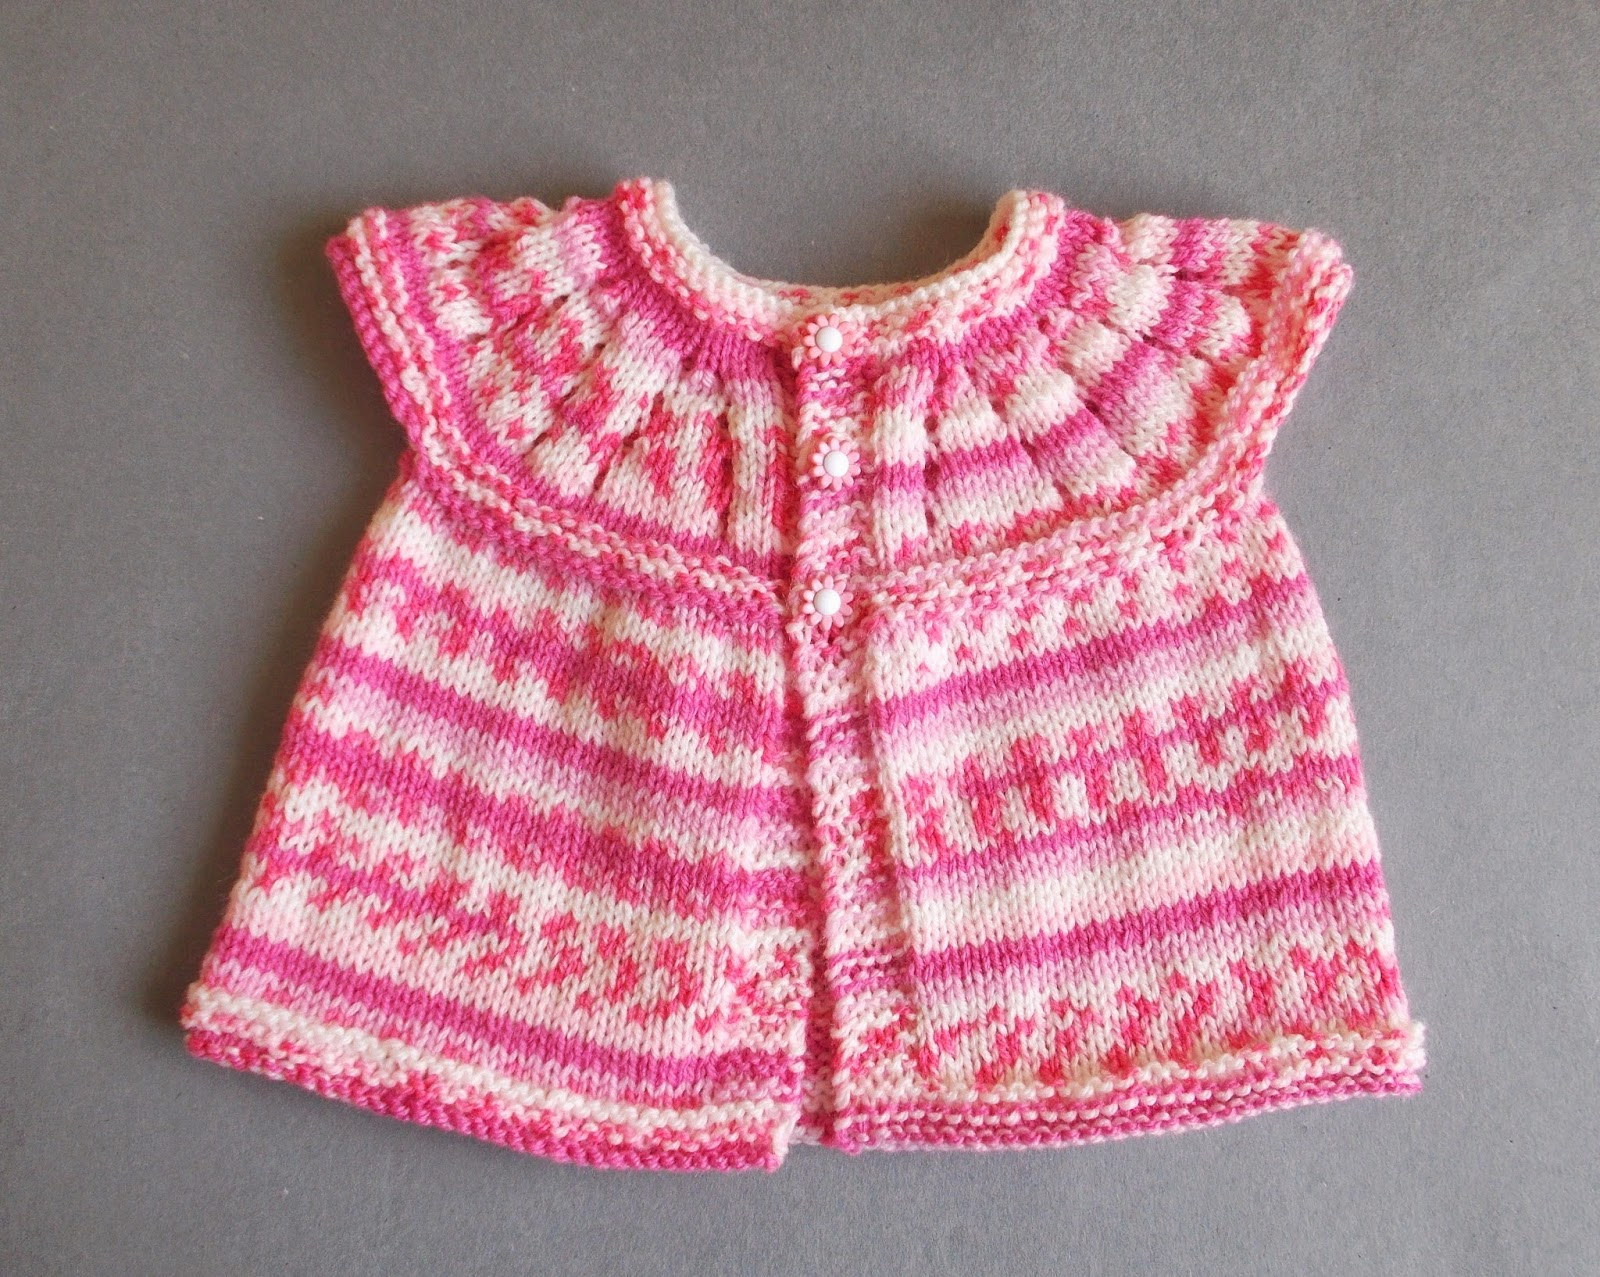 Free Uk Baby Knitting Patterns Made Marianna My Free Knitting Patterns